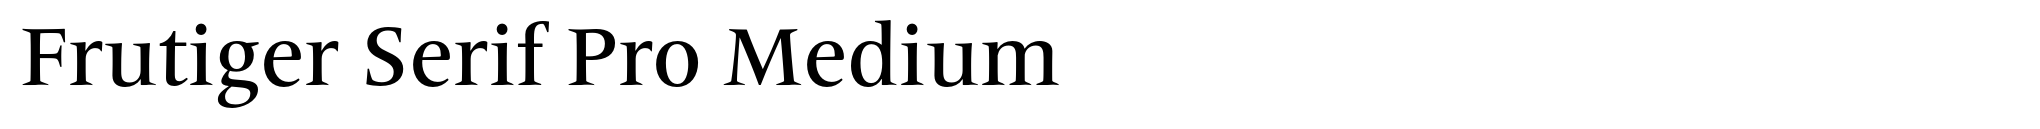 Frutiger Serif Pro Medium image